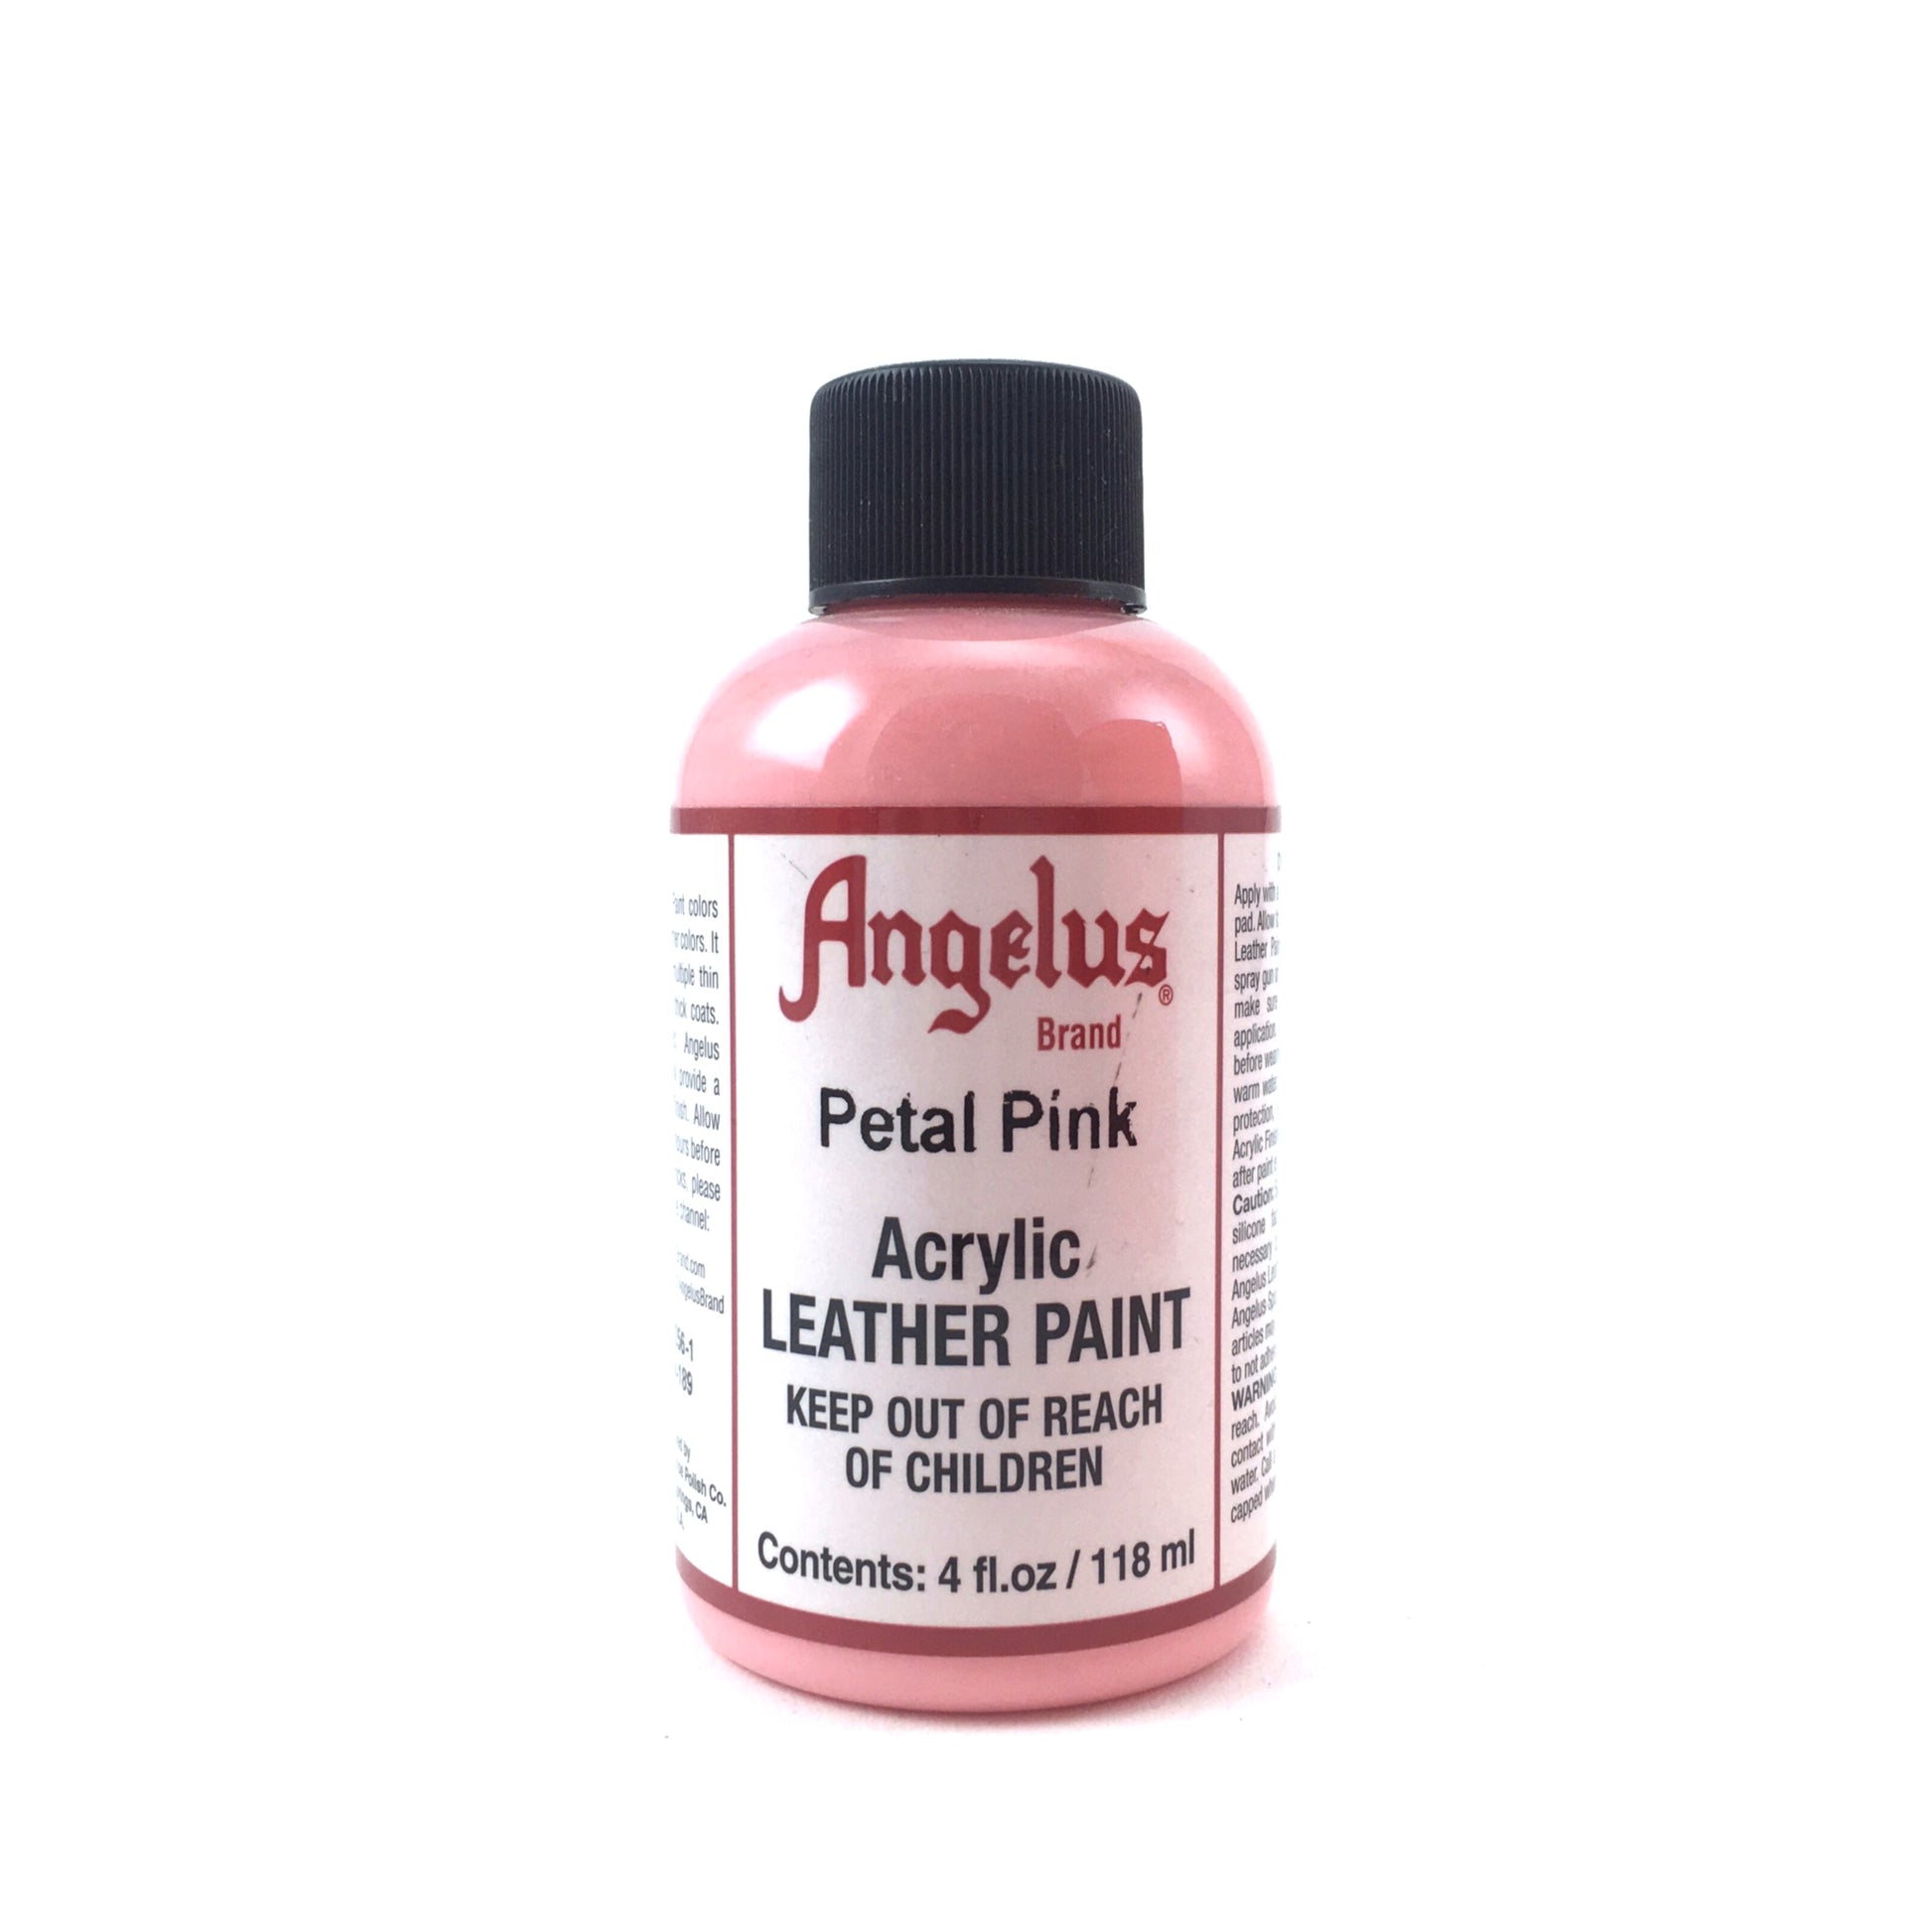 Angelus Acrylic Leather Paint - 4 oz. - Matte Petal Pink by Angelus - K. A. Artist Shop